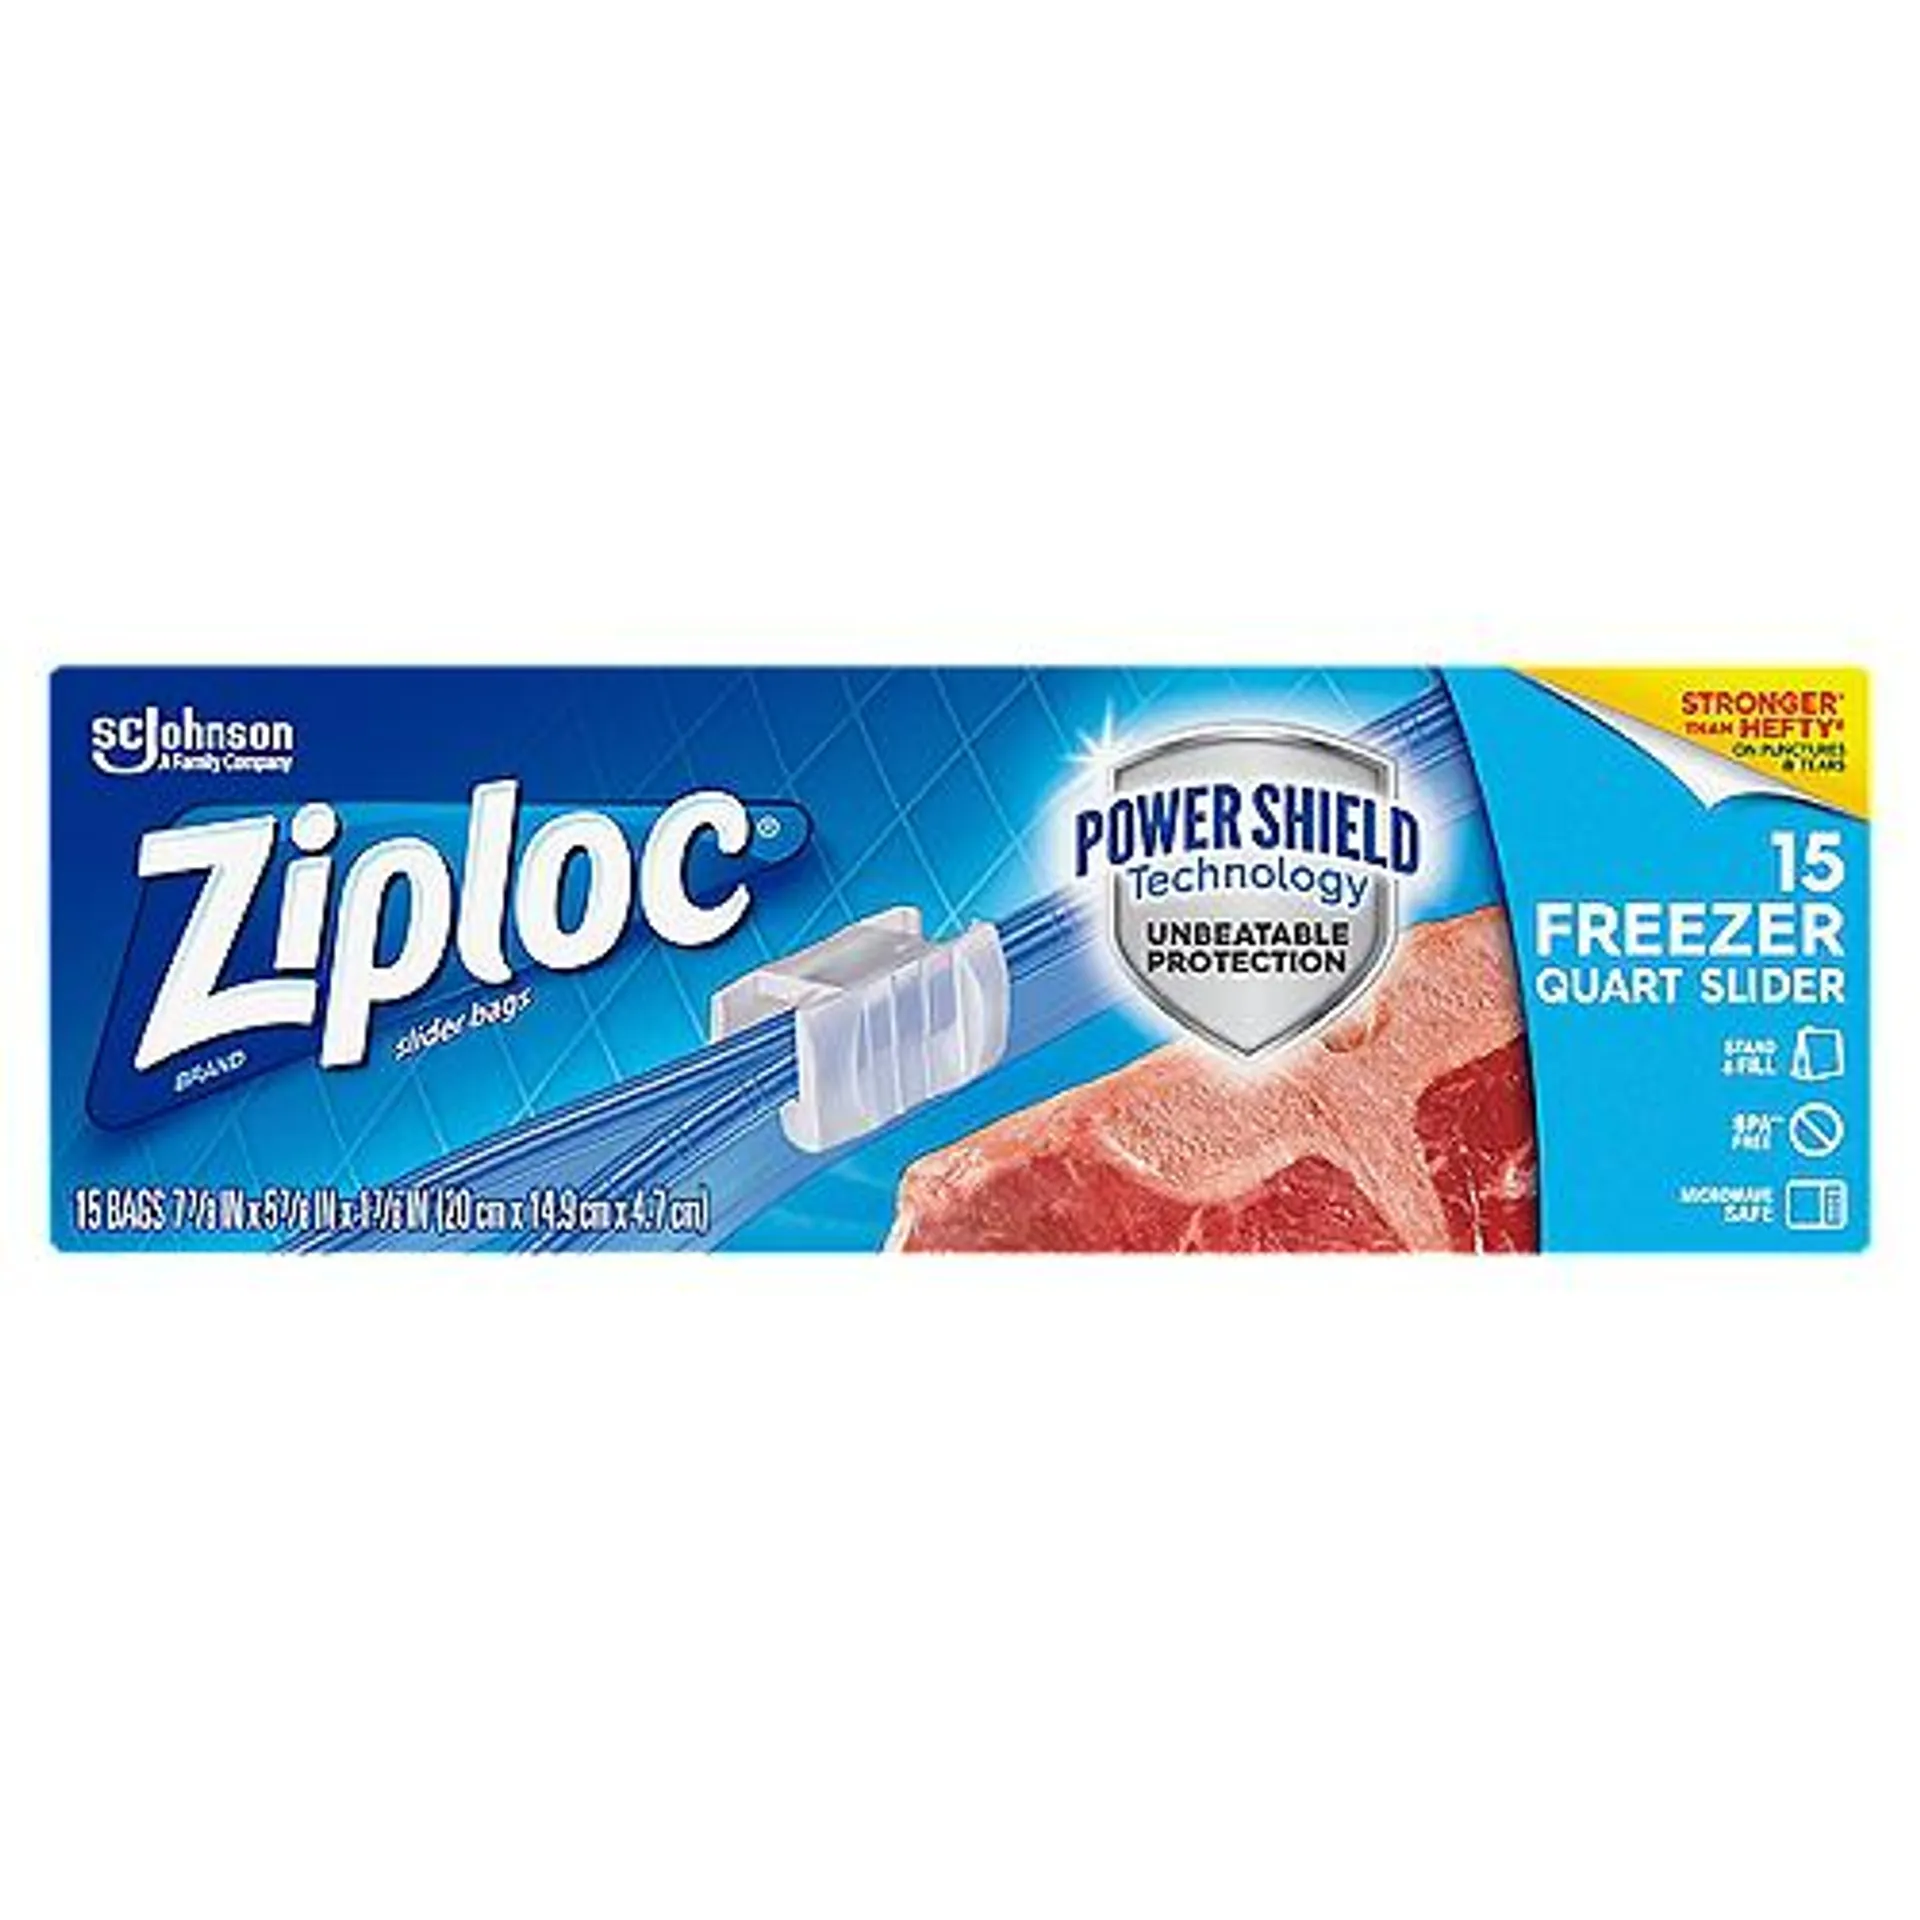 Ziploc Brand Slider with Power Shield Technology, Freezer Quart Bags, 15 Each